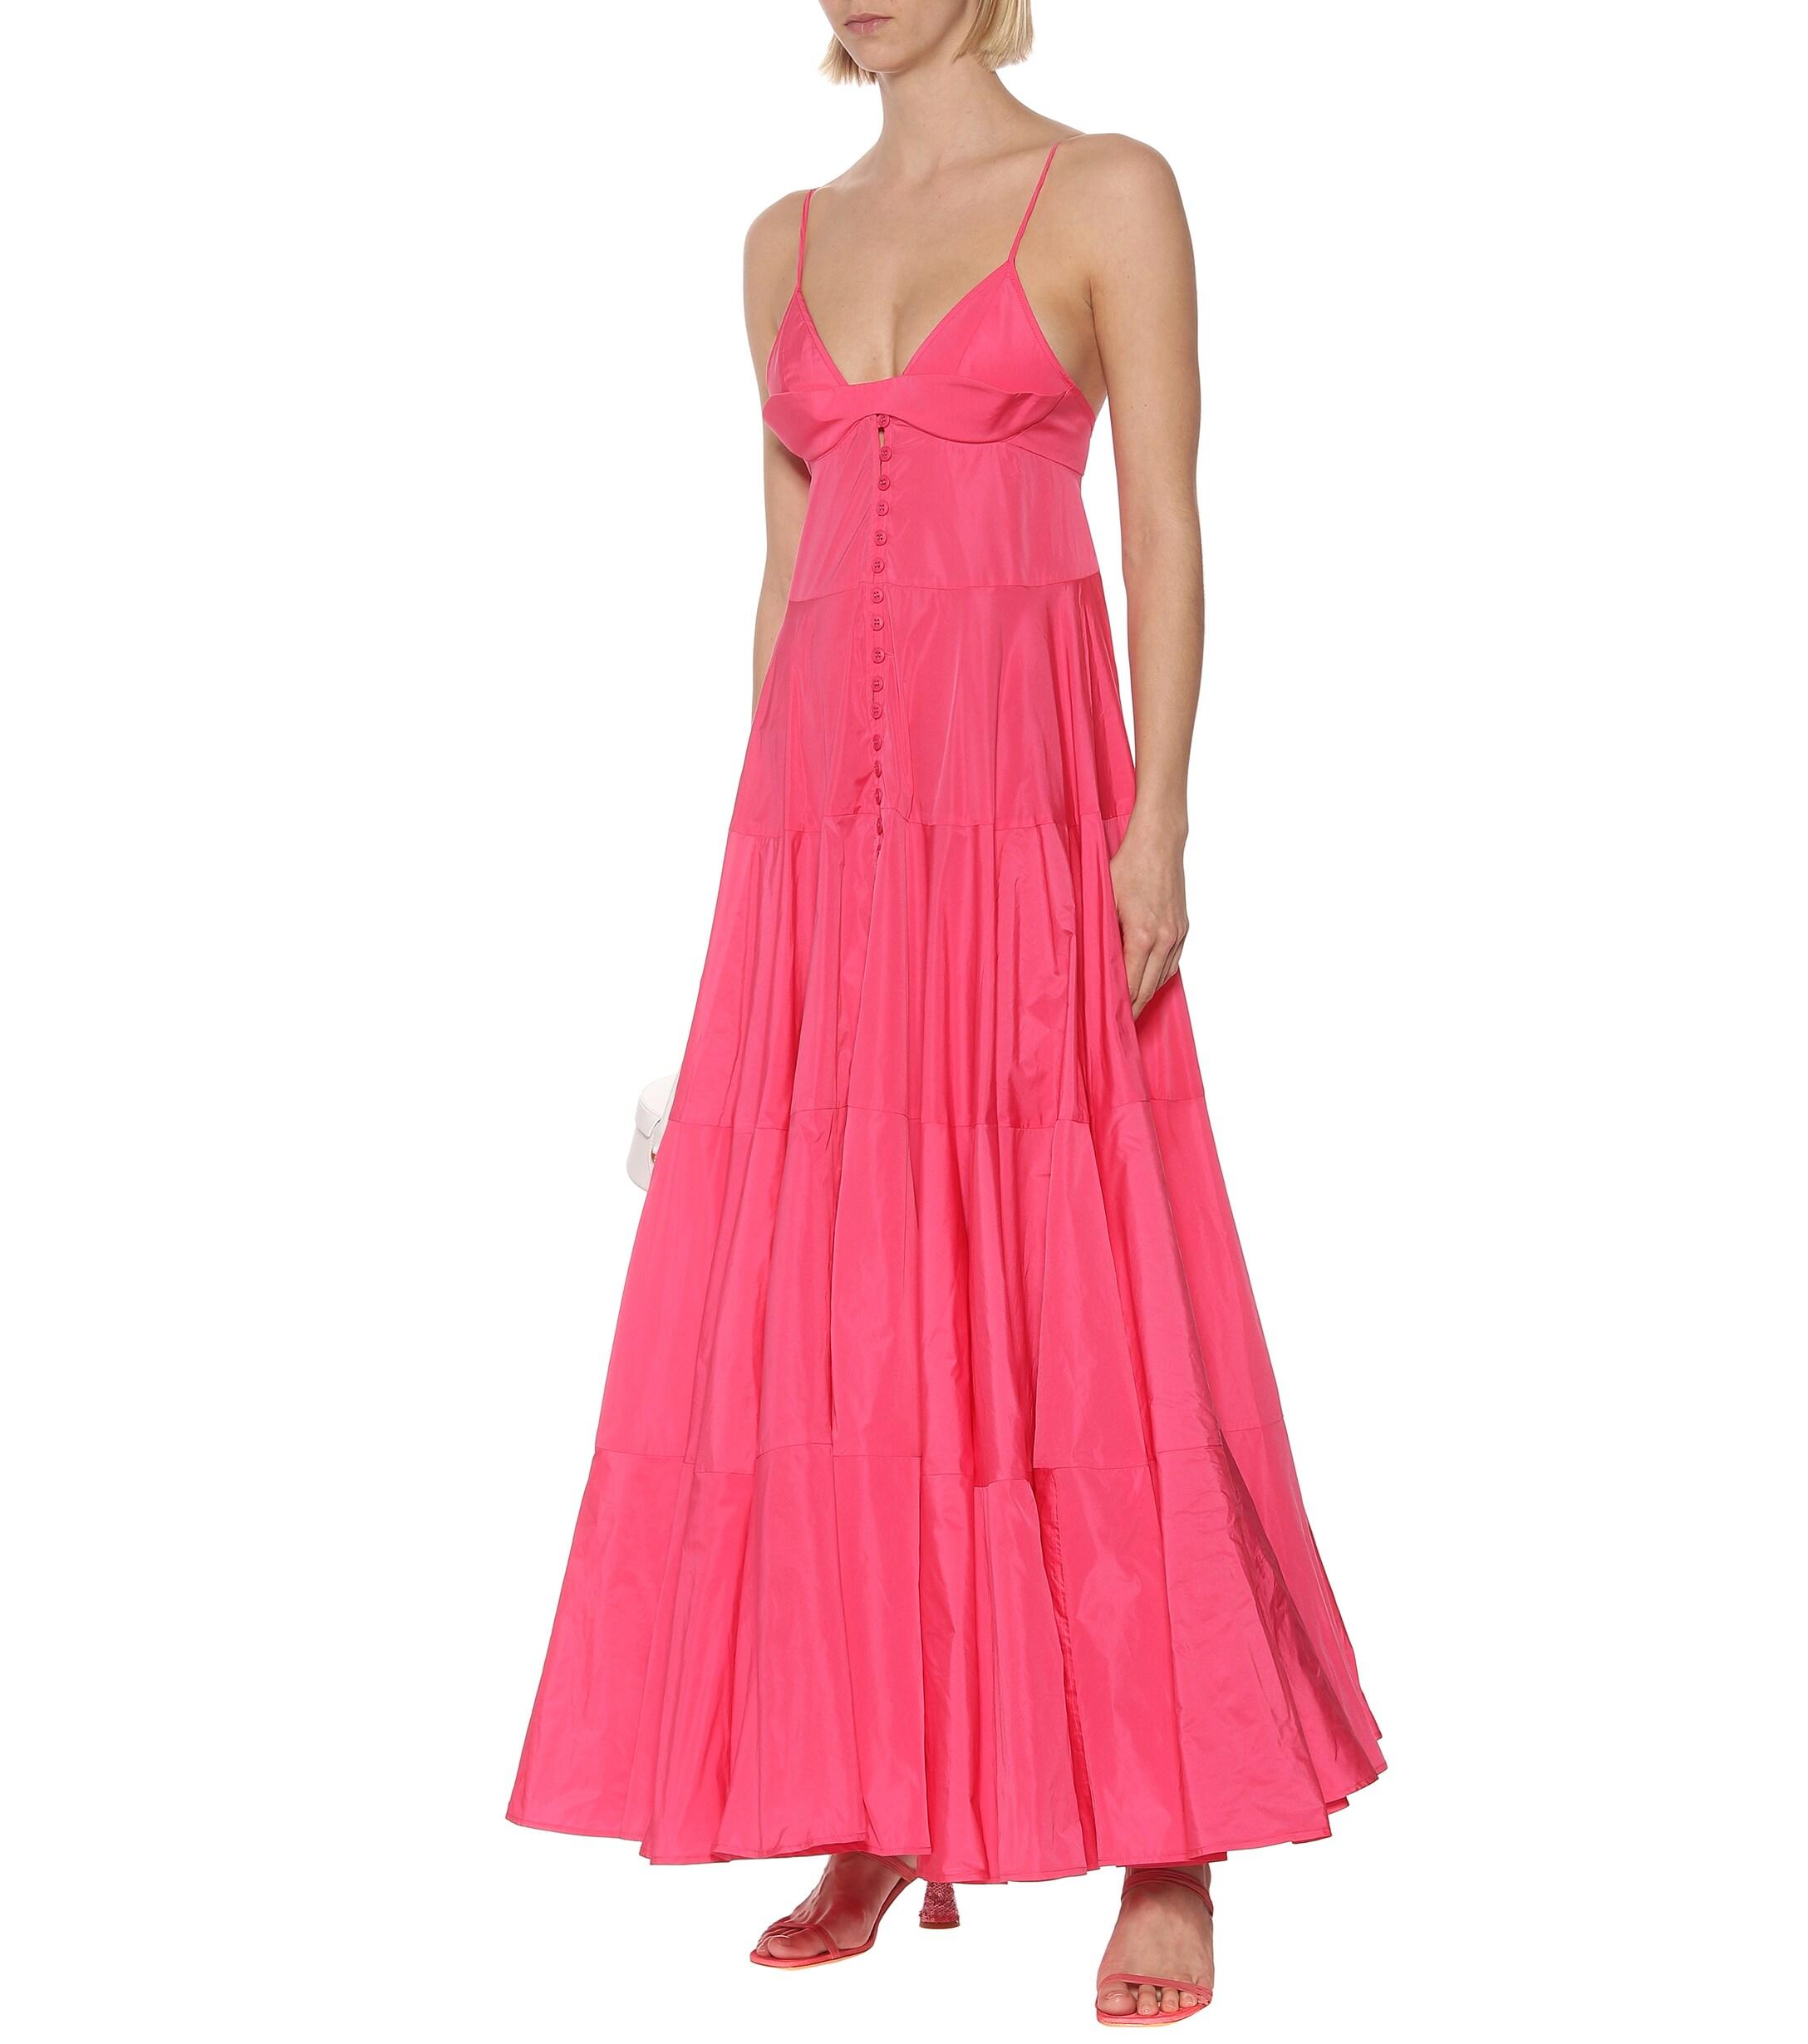 Jacquemus La Robe Manosque Maxi Dress in Pink - Lyst